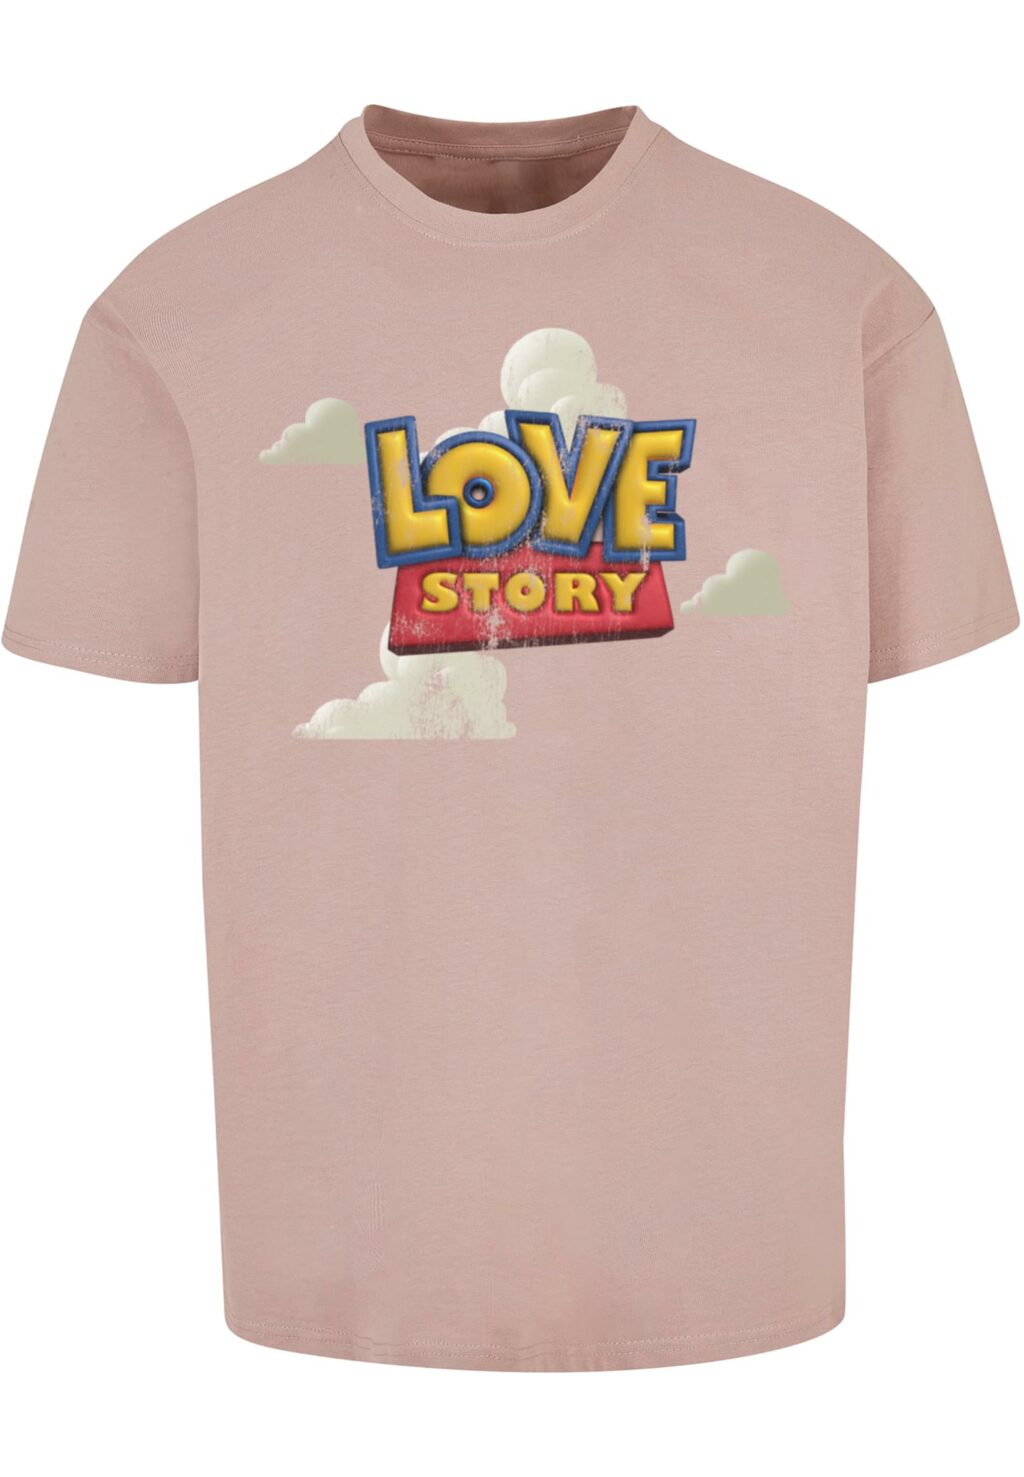 Love Story Heavy Oversize Tee duskrose MT3011